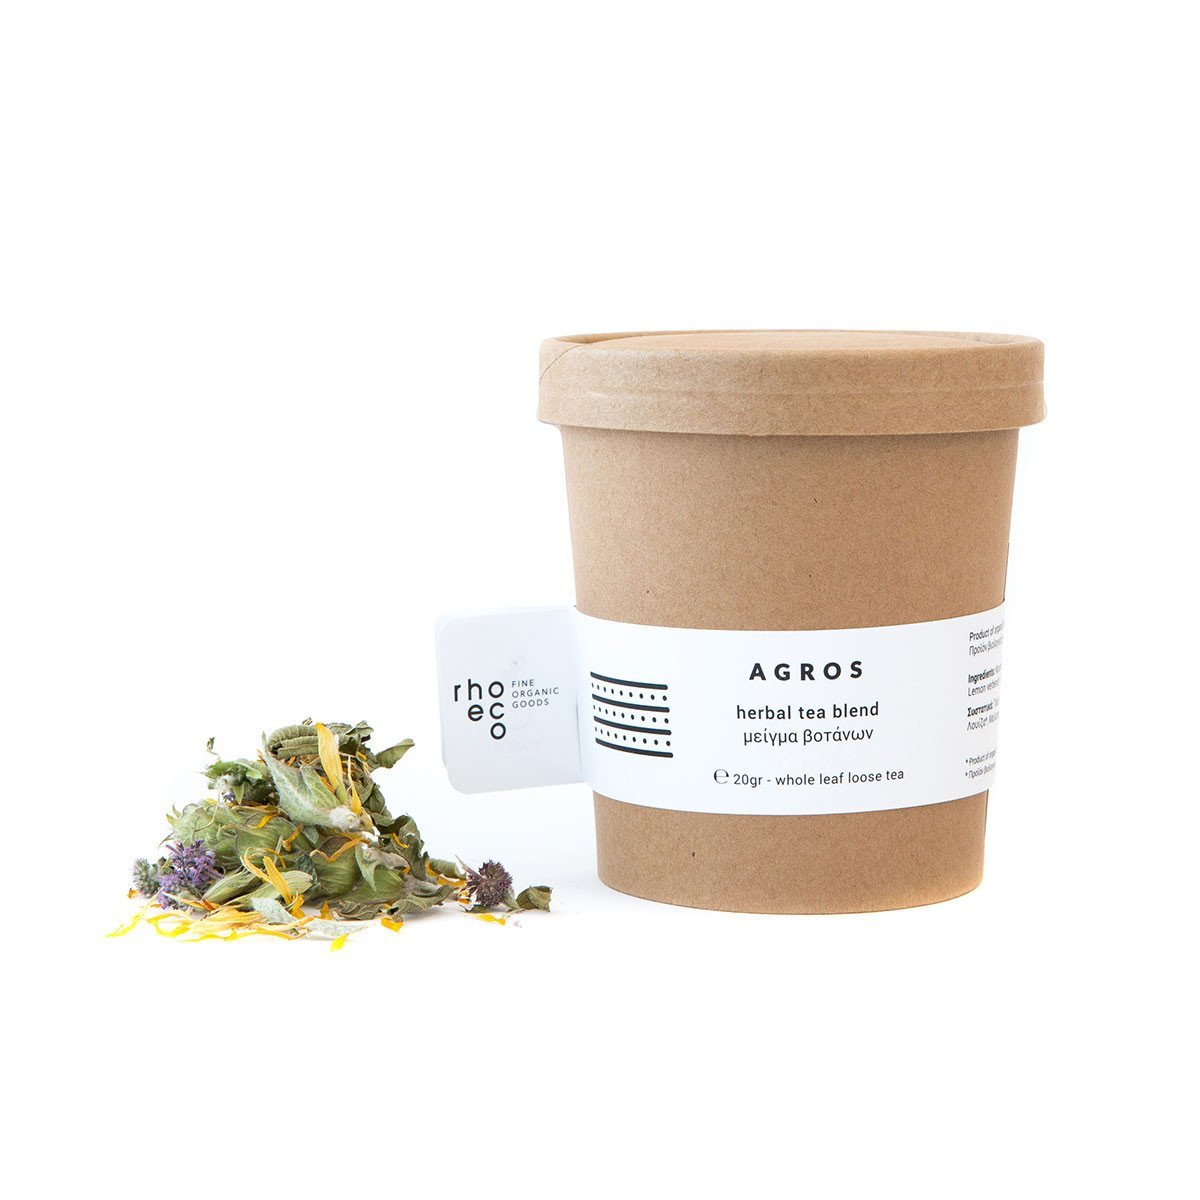 Agros Organic Herbal Tea Blend - The Future Kept - 1